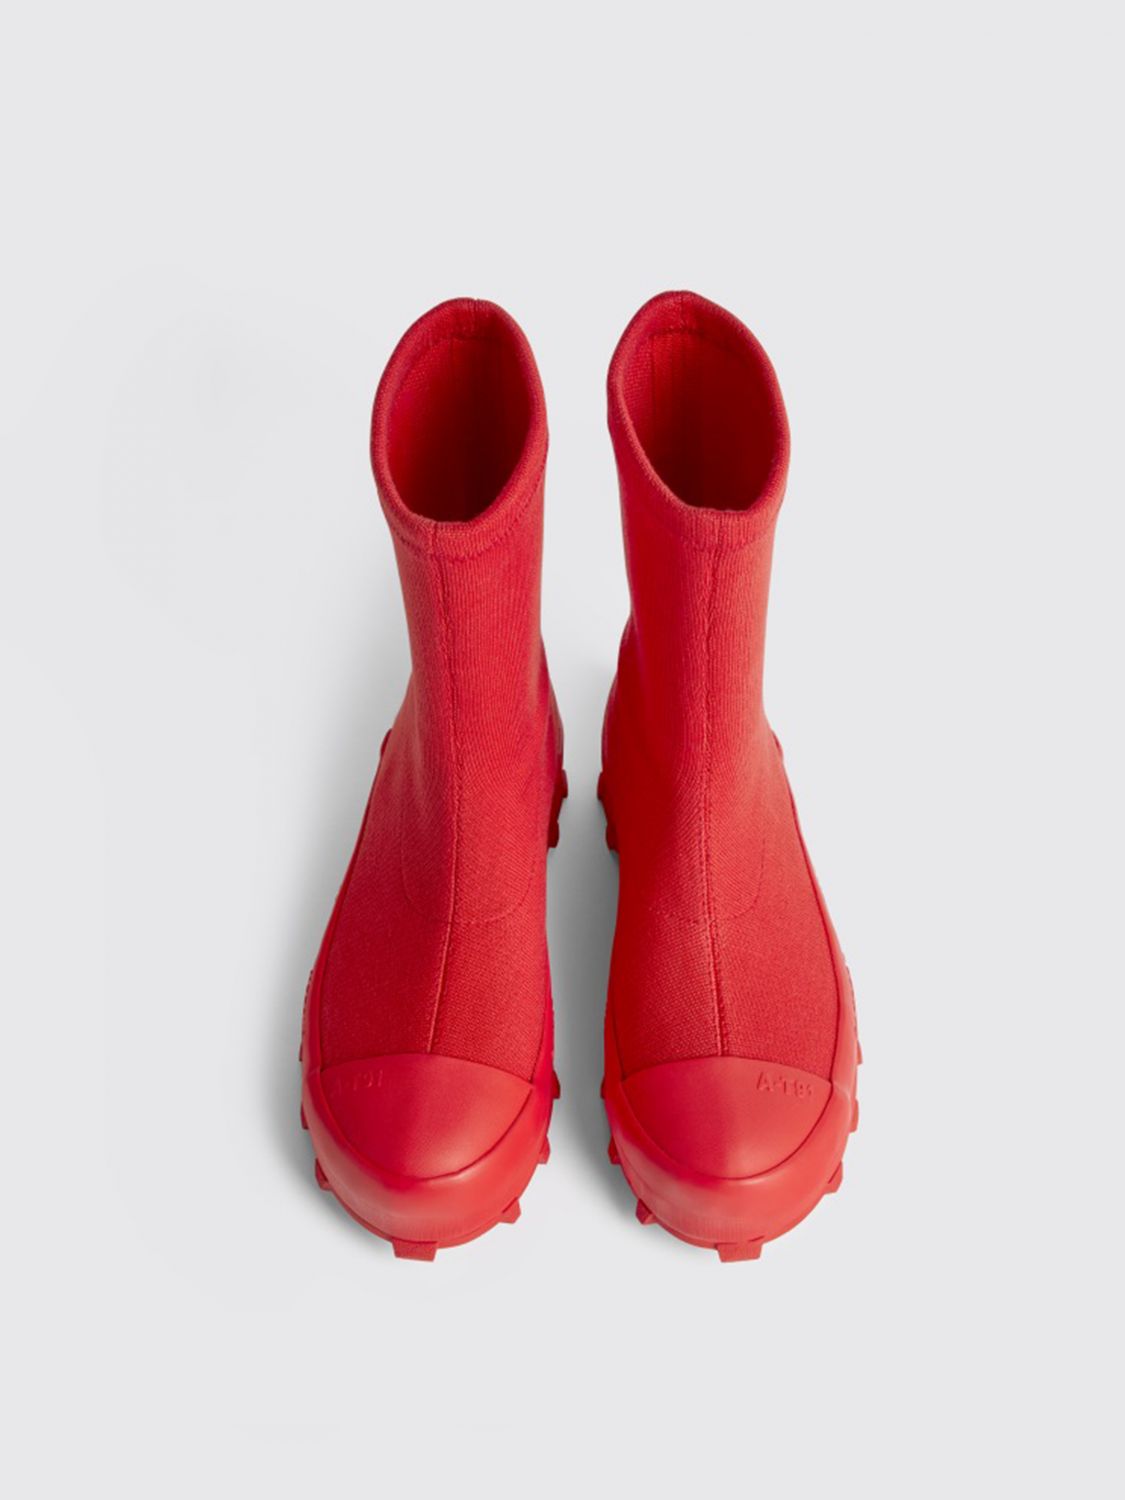 平底靴 Camperlab: Camperlab平底靴女士 红色 3